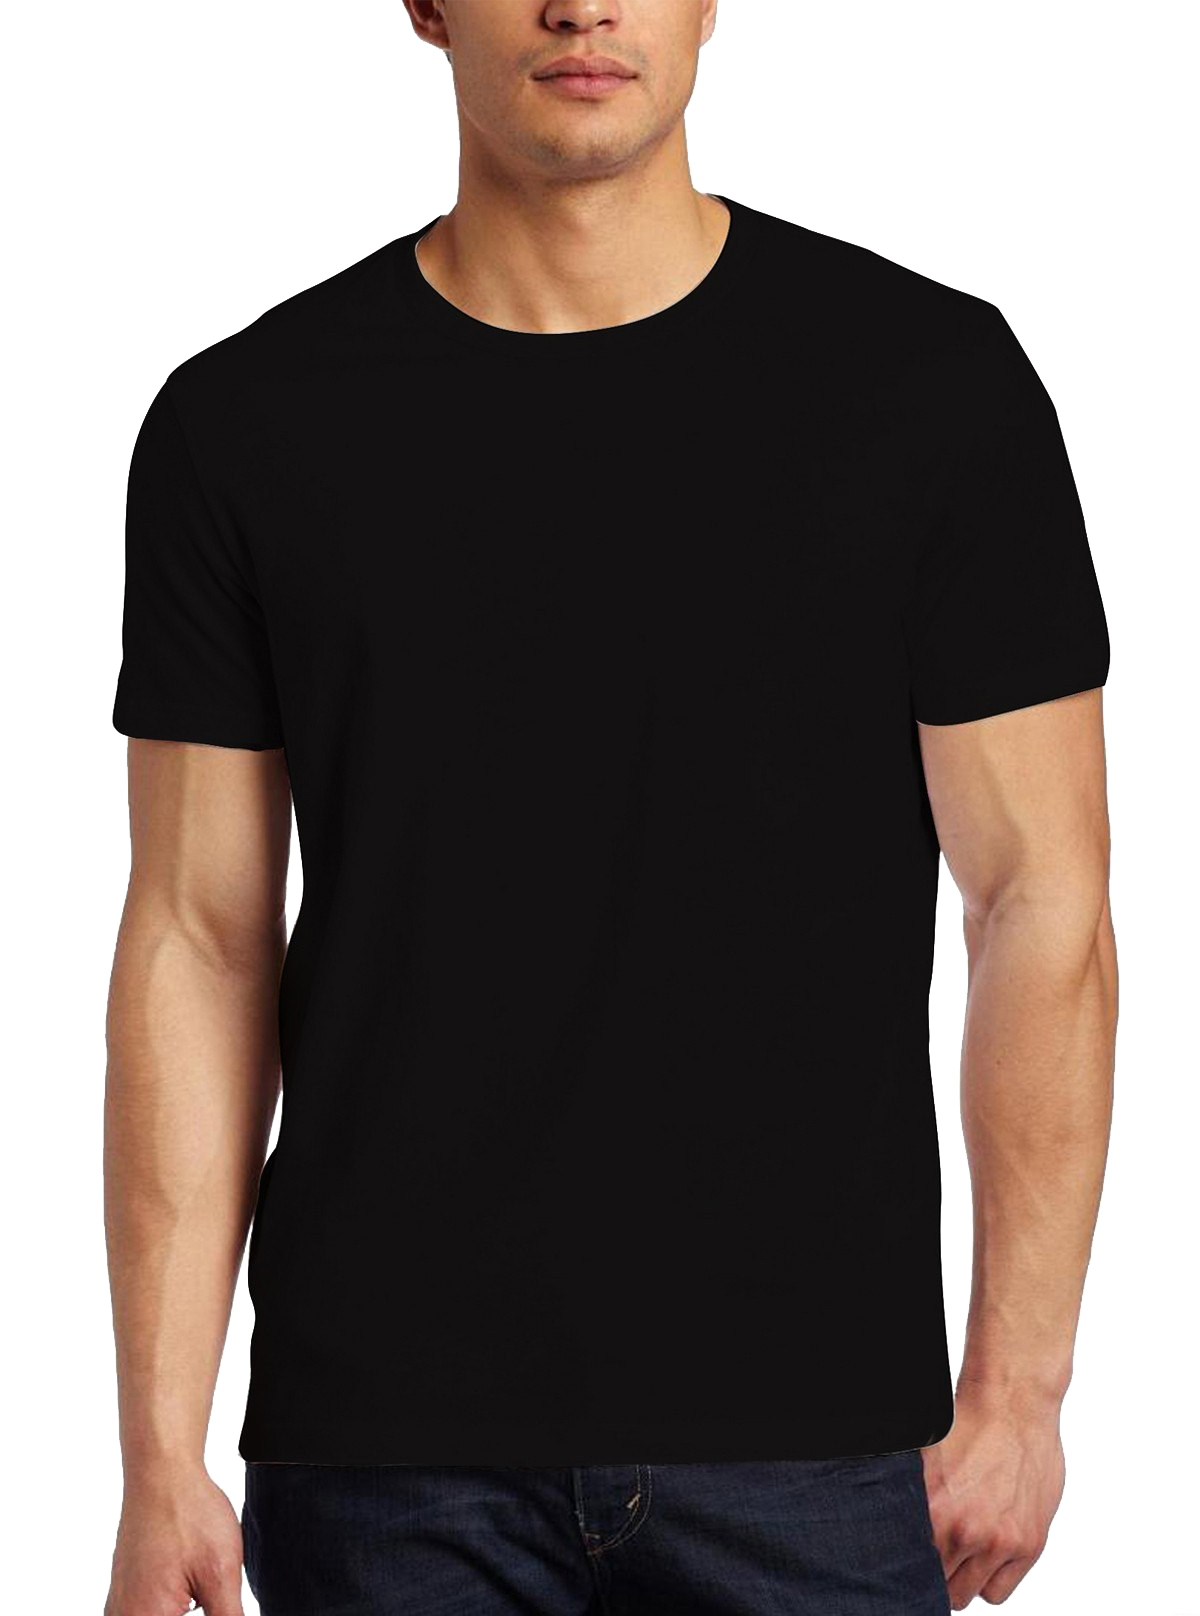 Siyah t-shirt PNG Görüntü arka plan